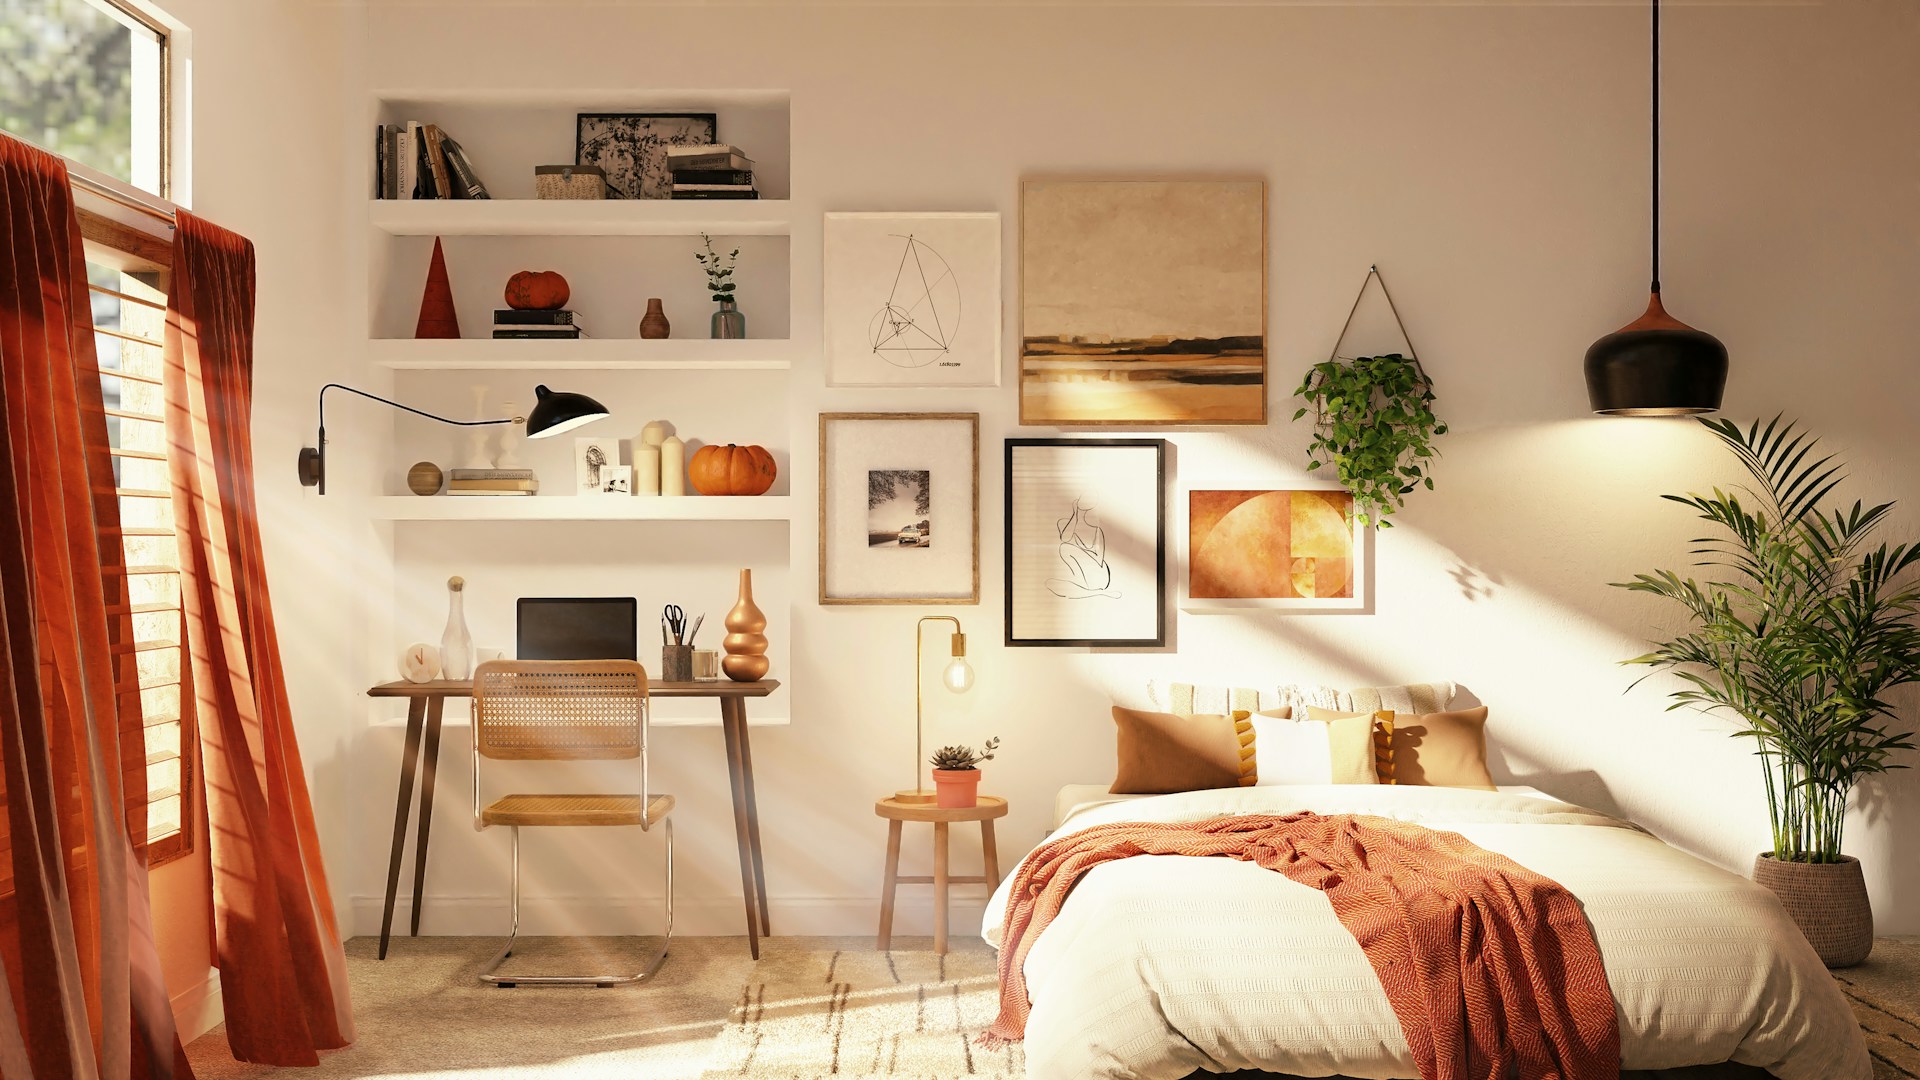 Studio apartment, desk, bed, art on walls and shelves